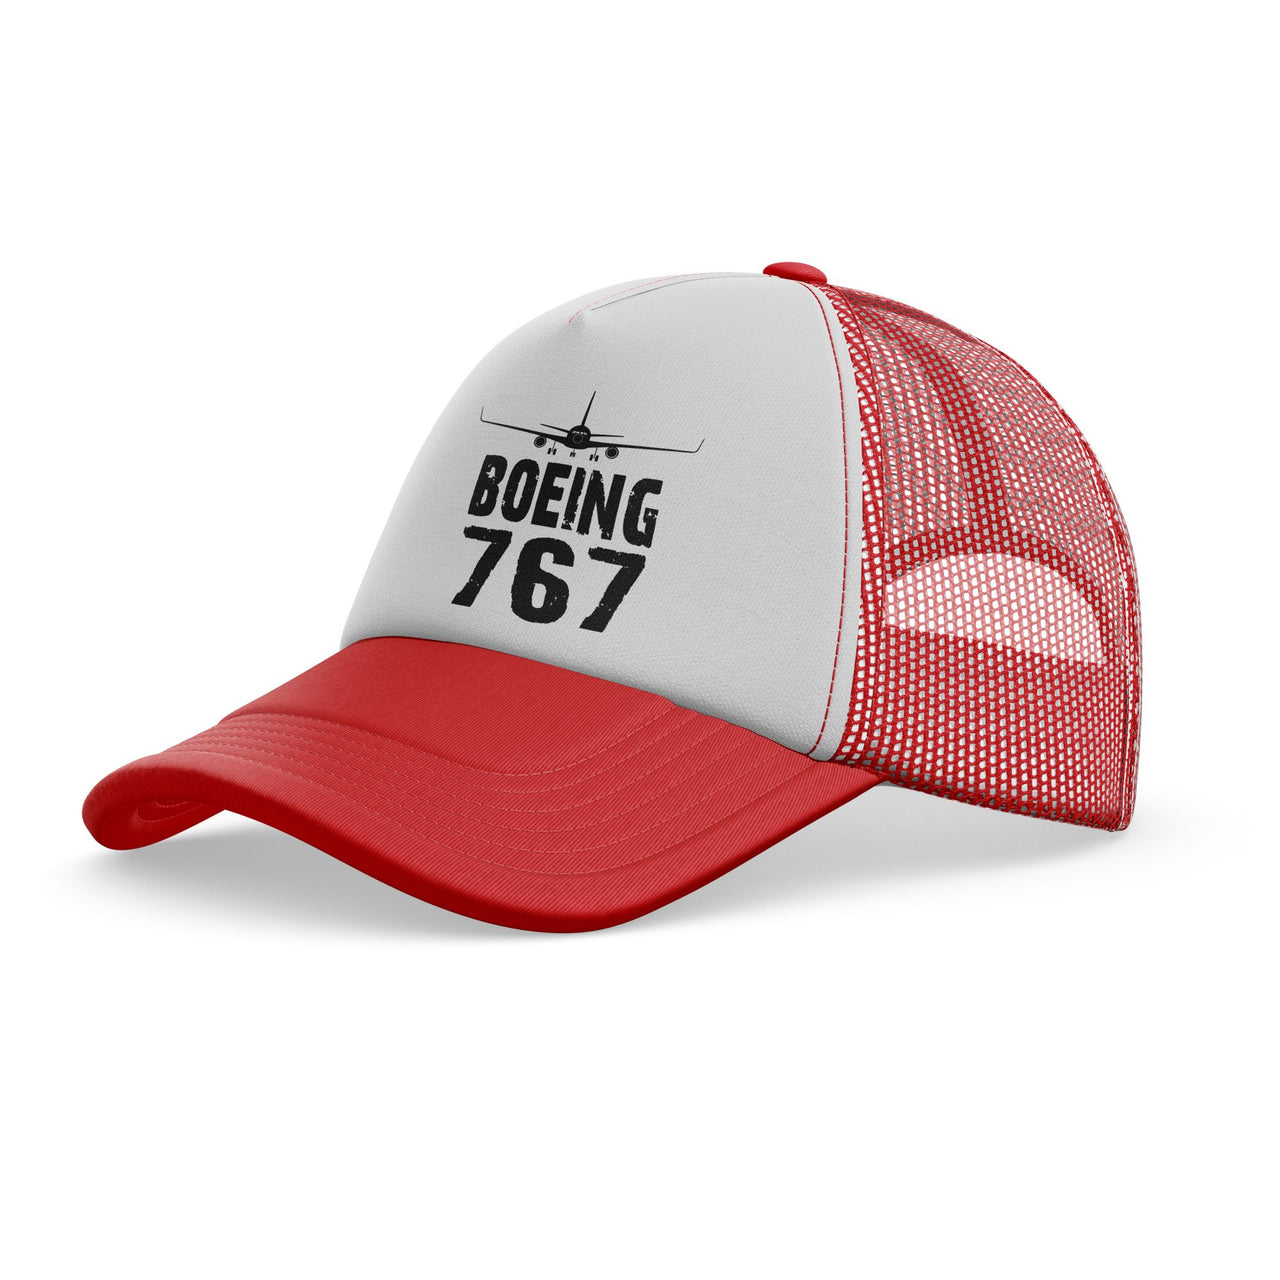 Boeing 767 & Plane Designed Trucker Caps & Hats